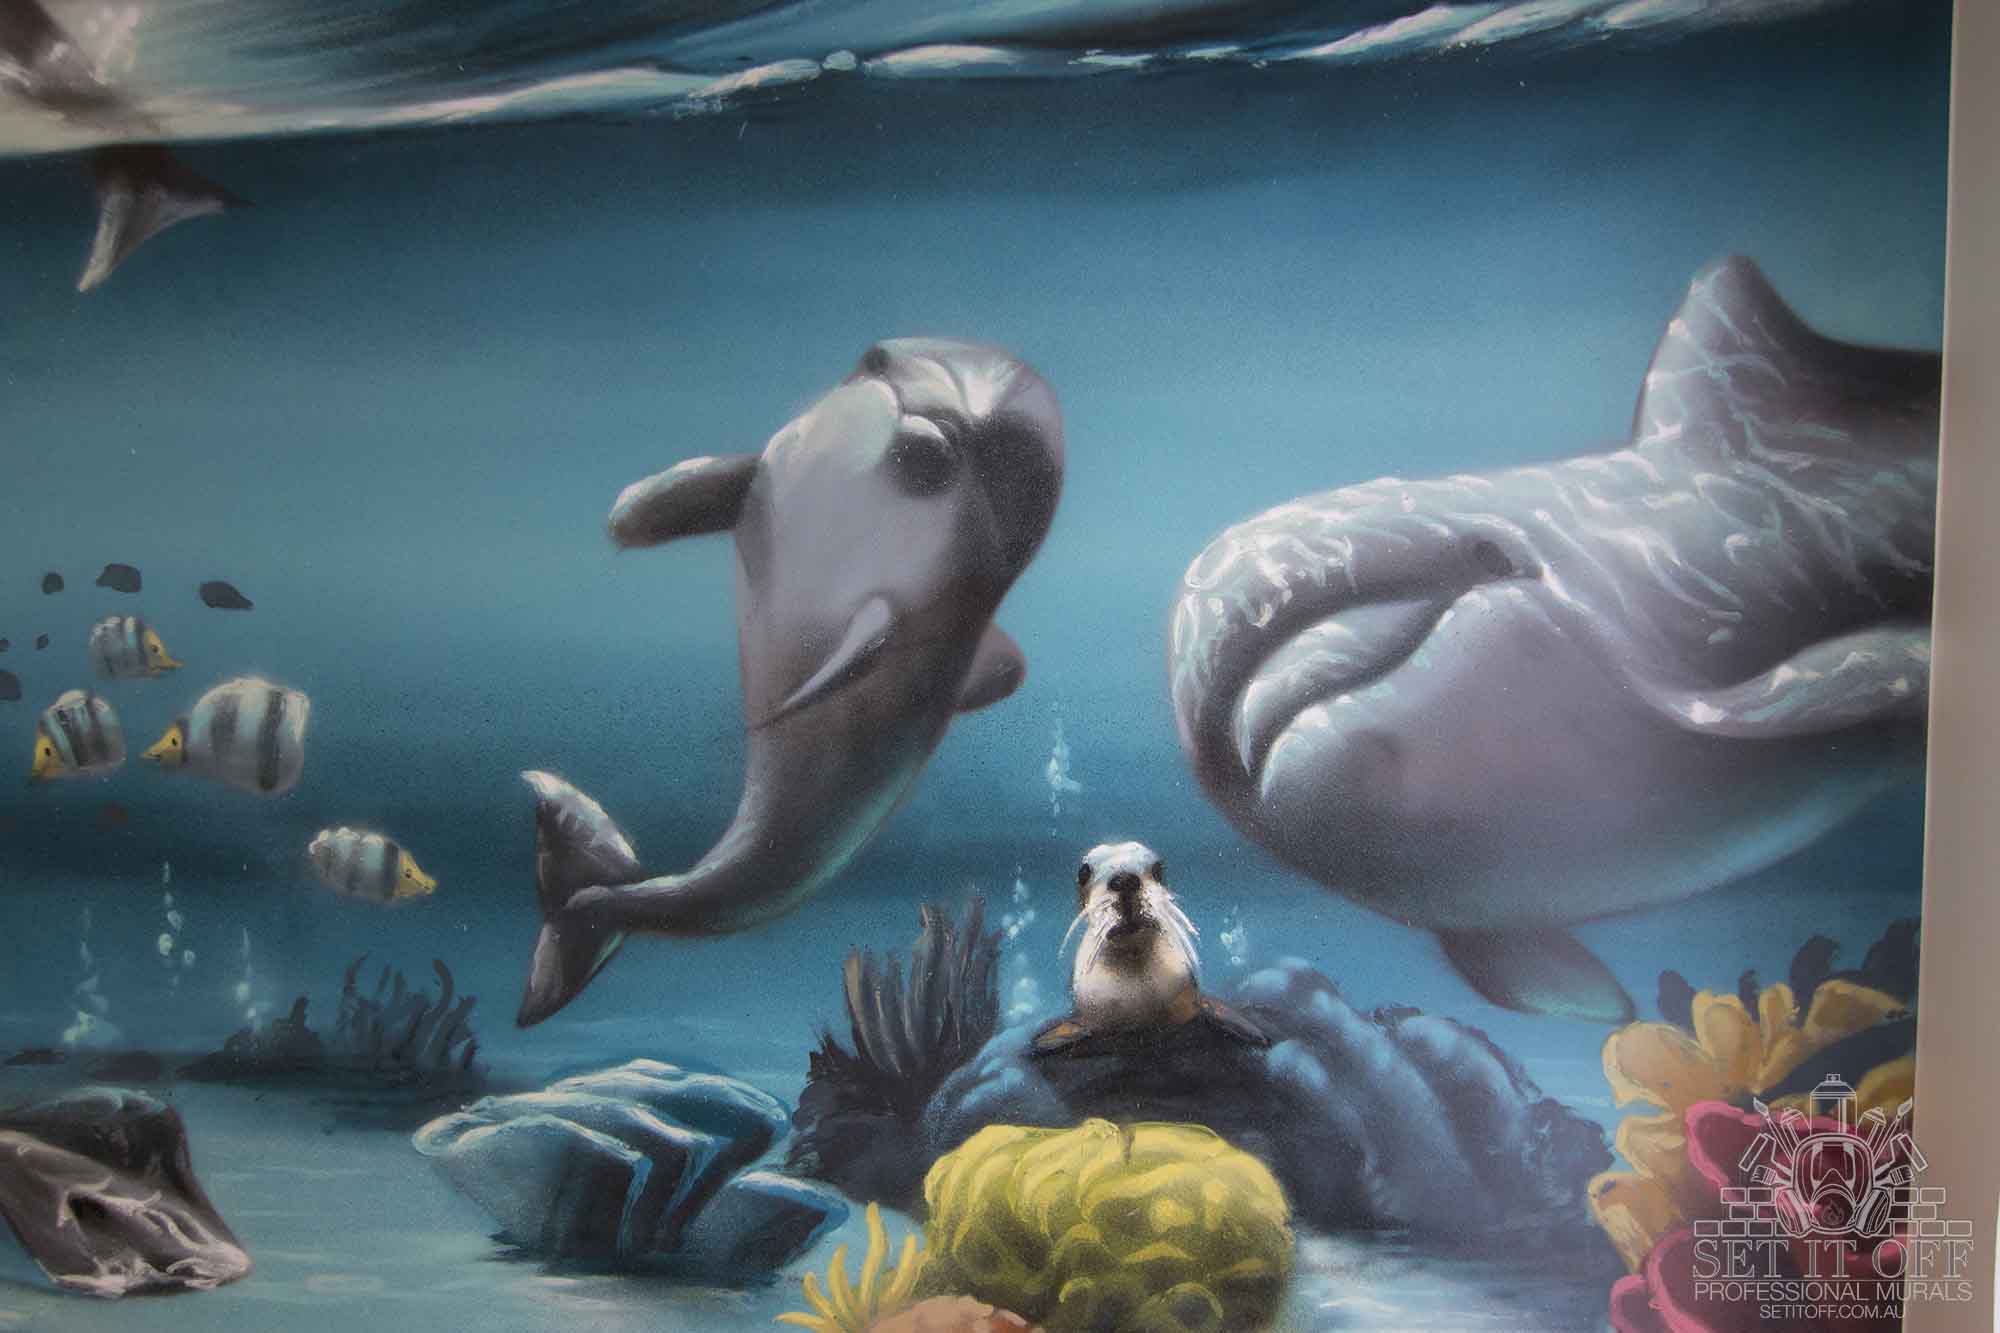 Painted seaworld wall mural for kids bedroom